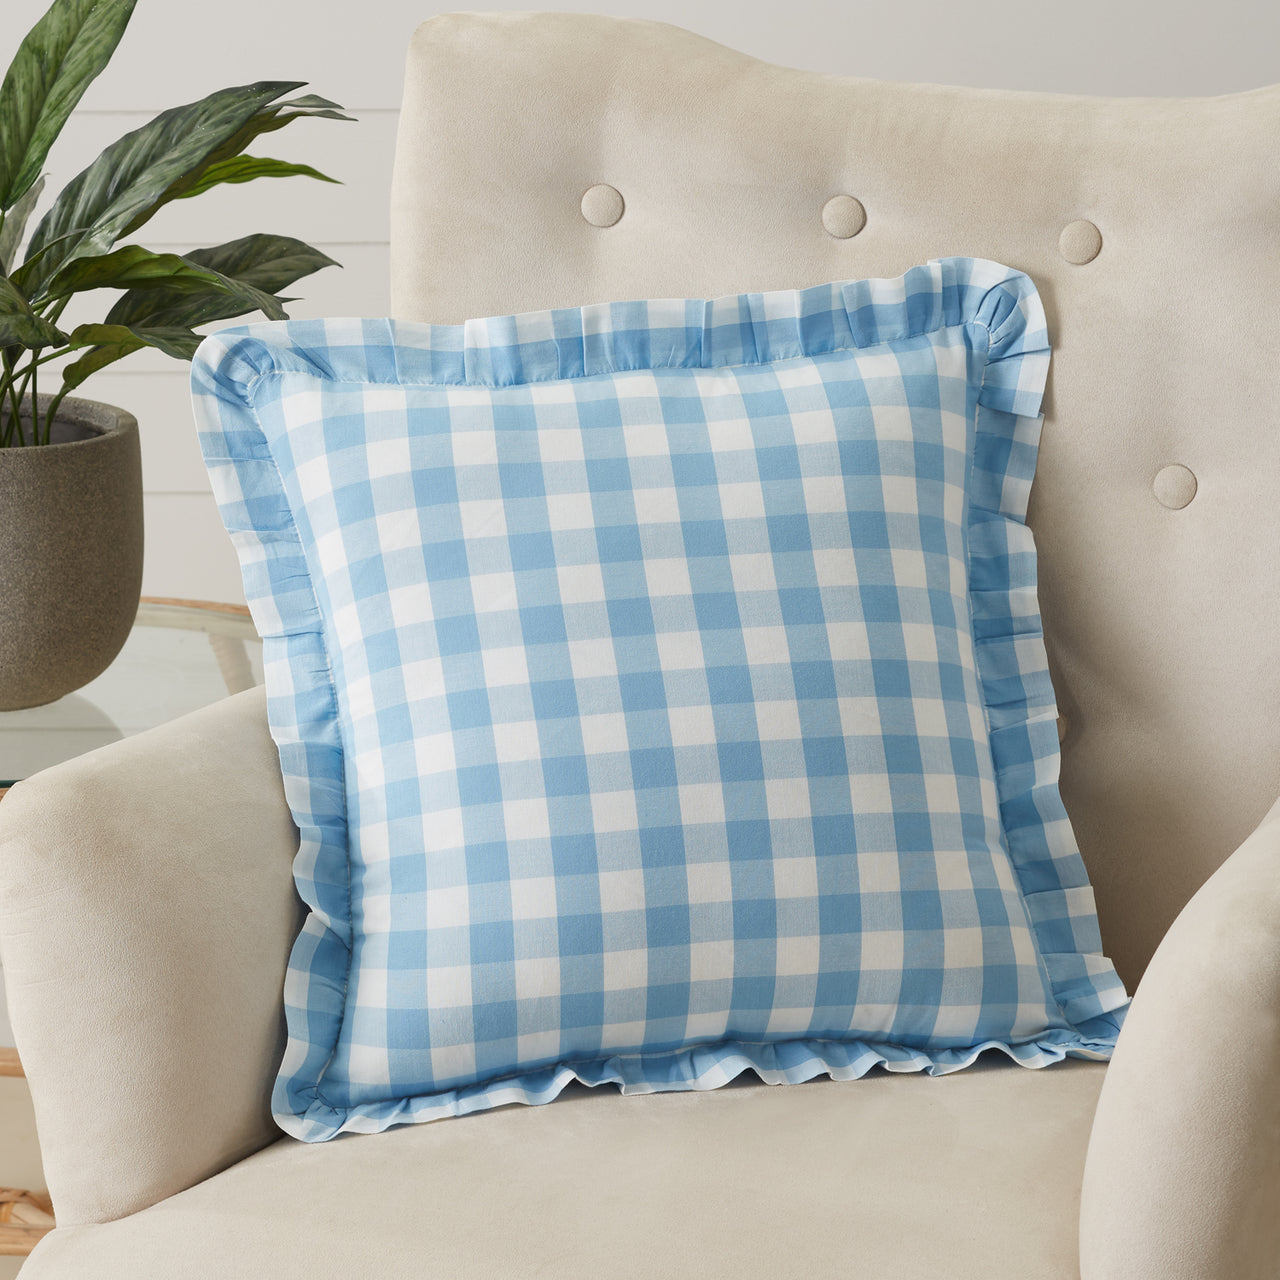 Annie Buffalo Blue Check Ruffled Fabric Pillow 18x18 VHC Brands